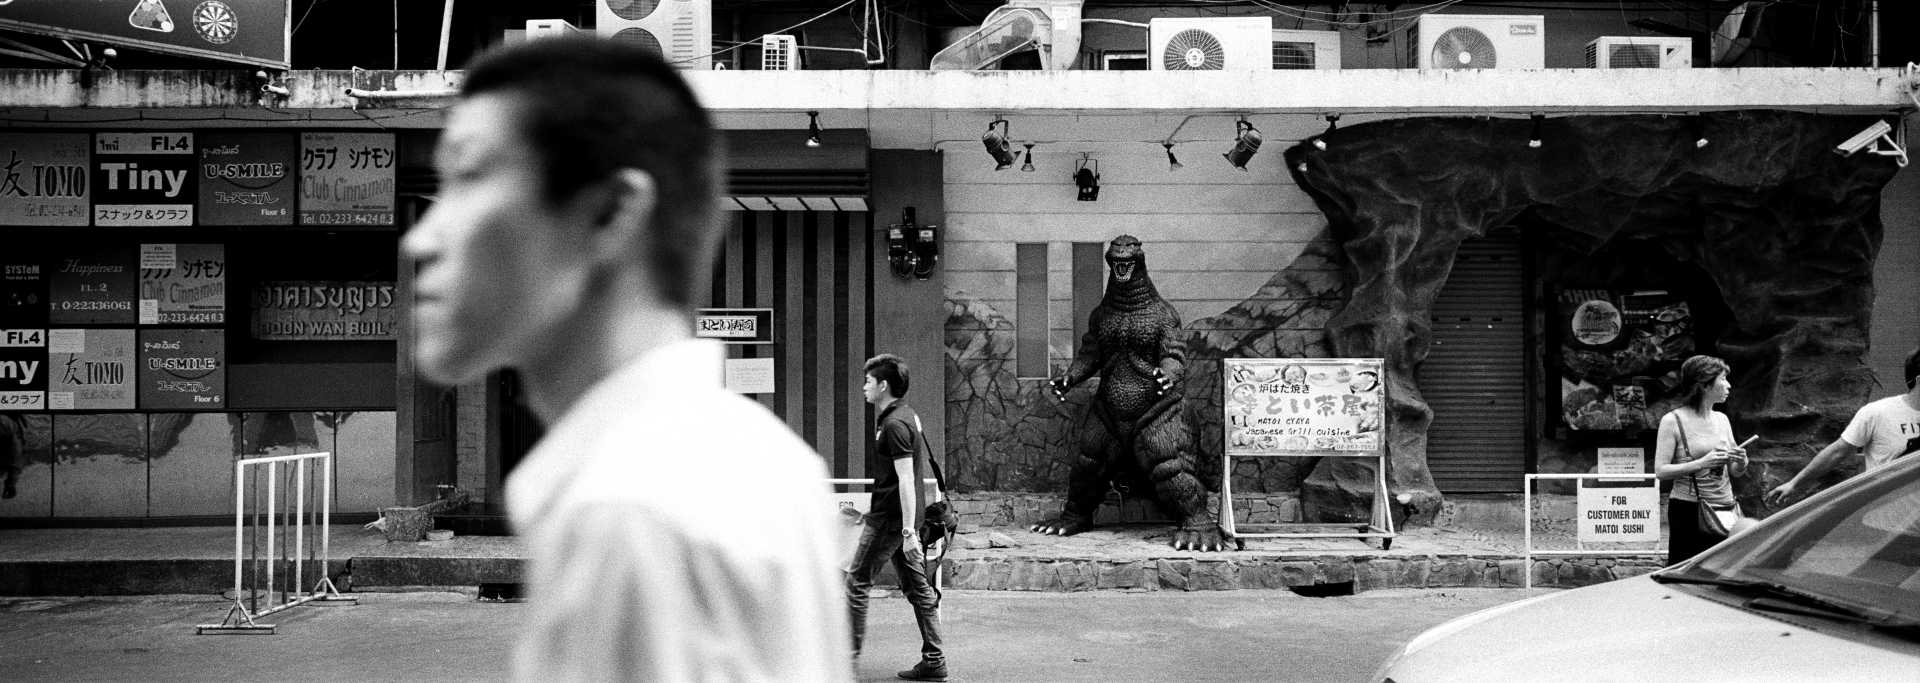  "Godzilla" Bangkok, Thailand. 